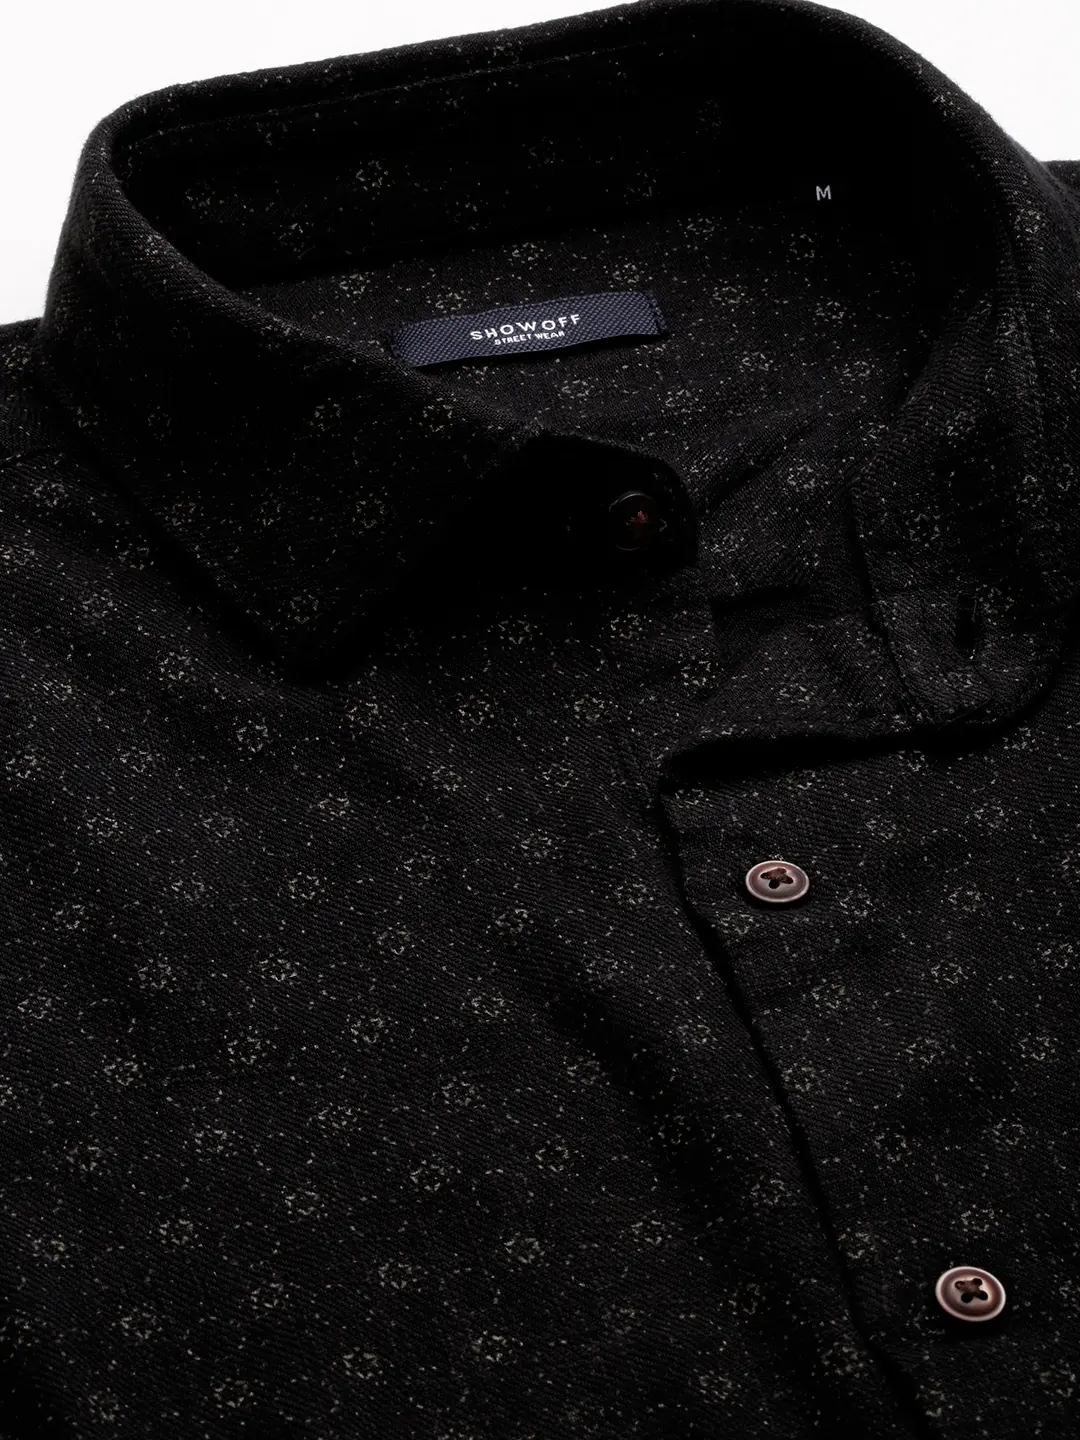 Showoff | SHOWOFF Men Black Printed Spread Collar Full Sleeves Casual Shirt 5